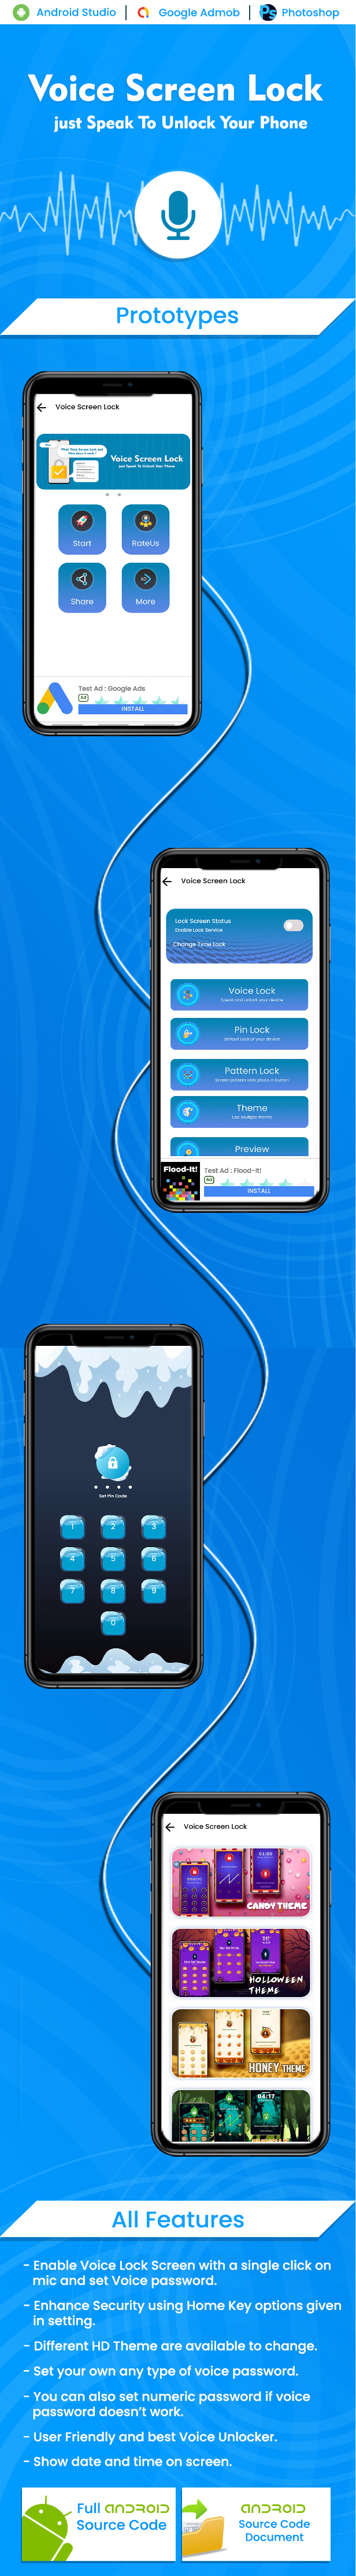 Voice Screen Lock - Voice Screen | Voice Screen Lock | Android App | Admob Ads - 1